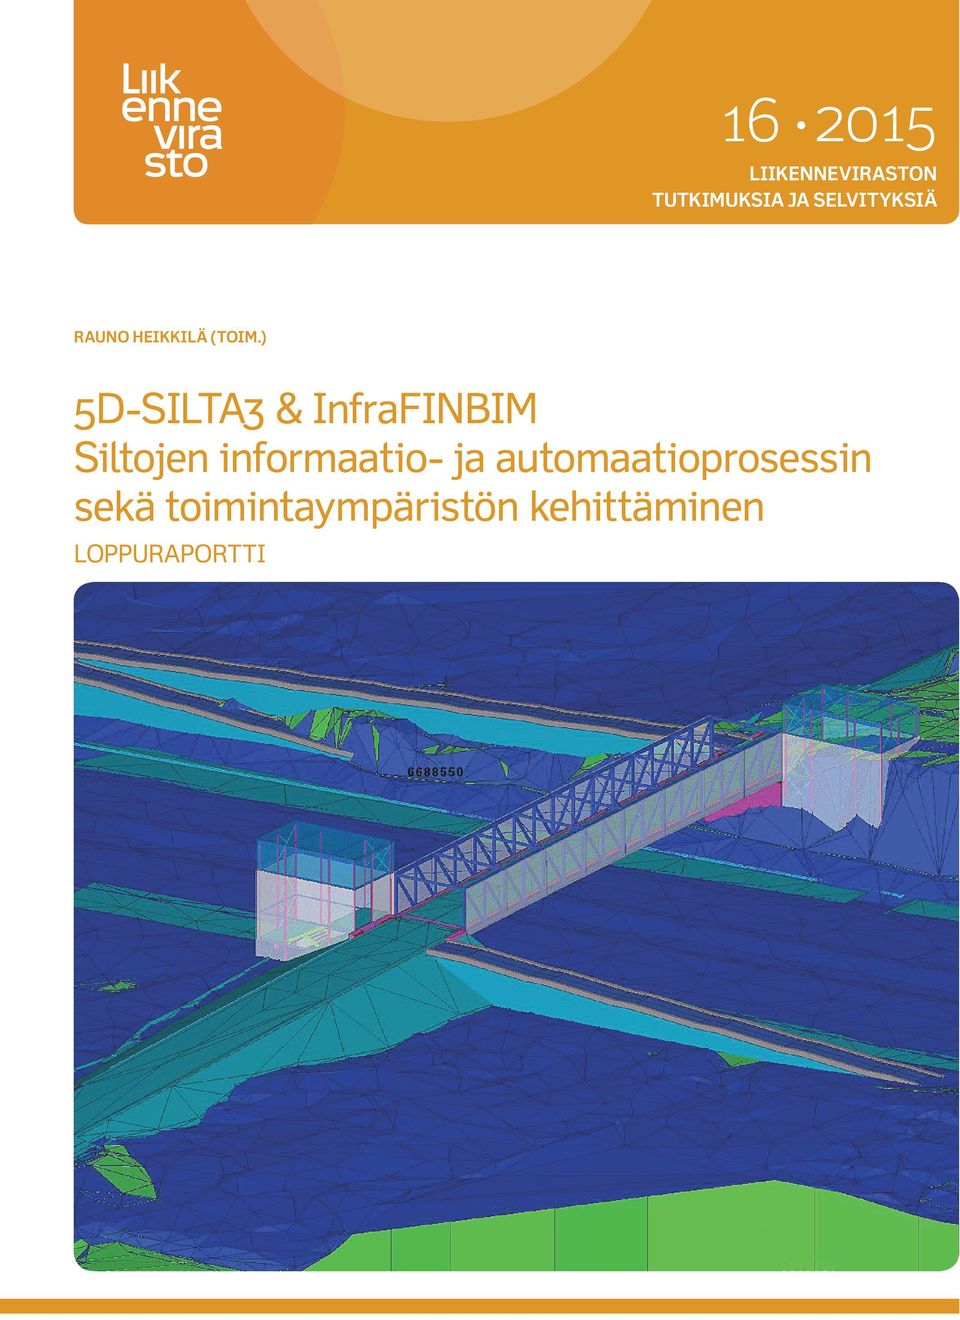 ) 5D-SILTA3 & InfraFINBIM Siltojen informaatio-